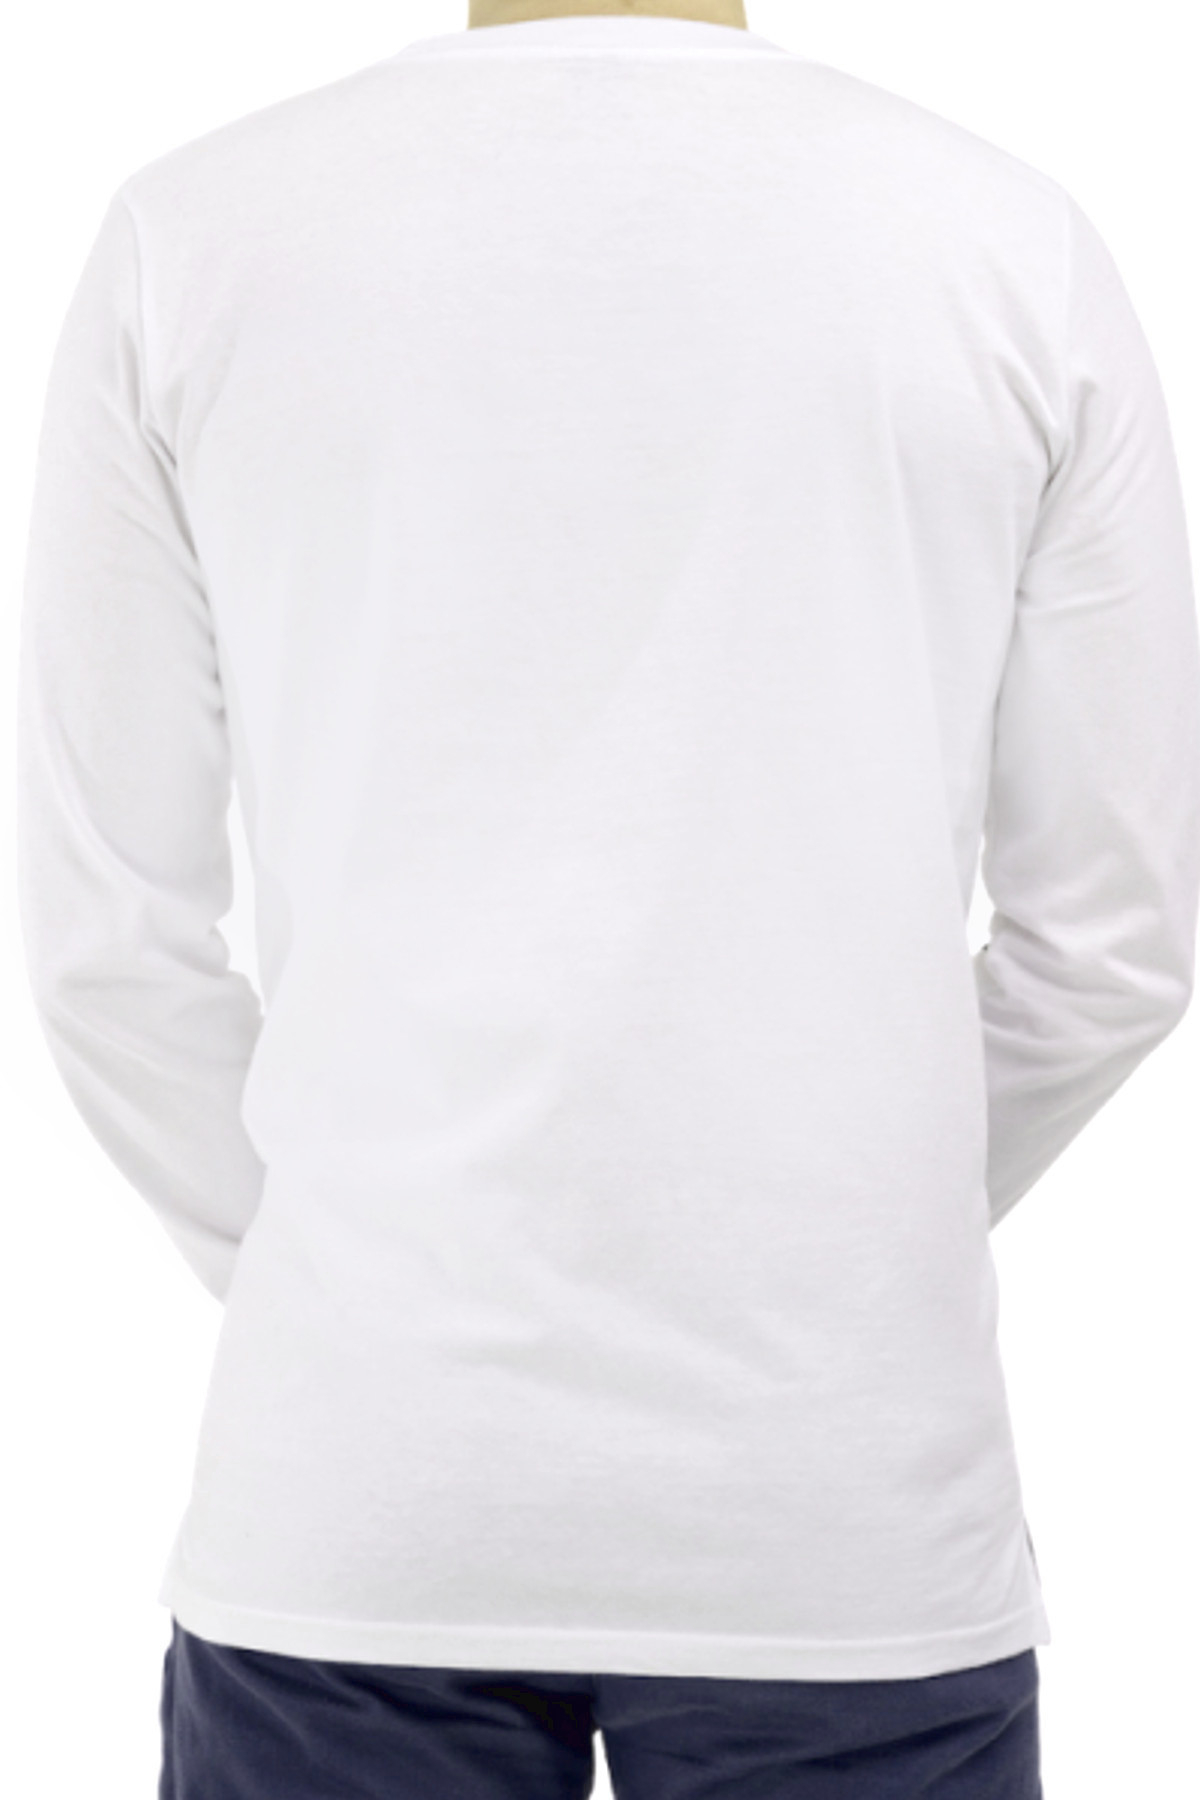 Boyalı Canavar Beyaz Bisiklet Yaka Uzun Kollu Erkek Penye T-shirt